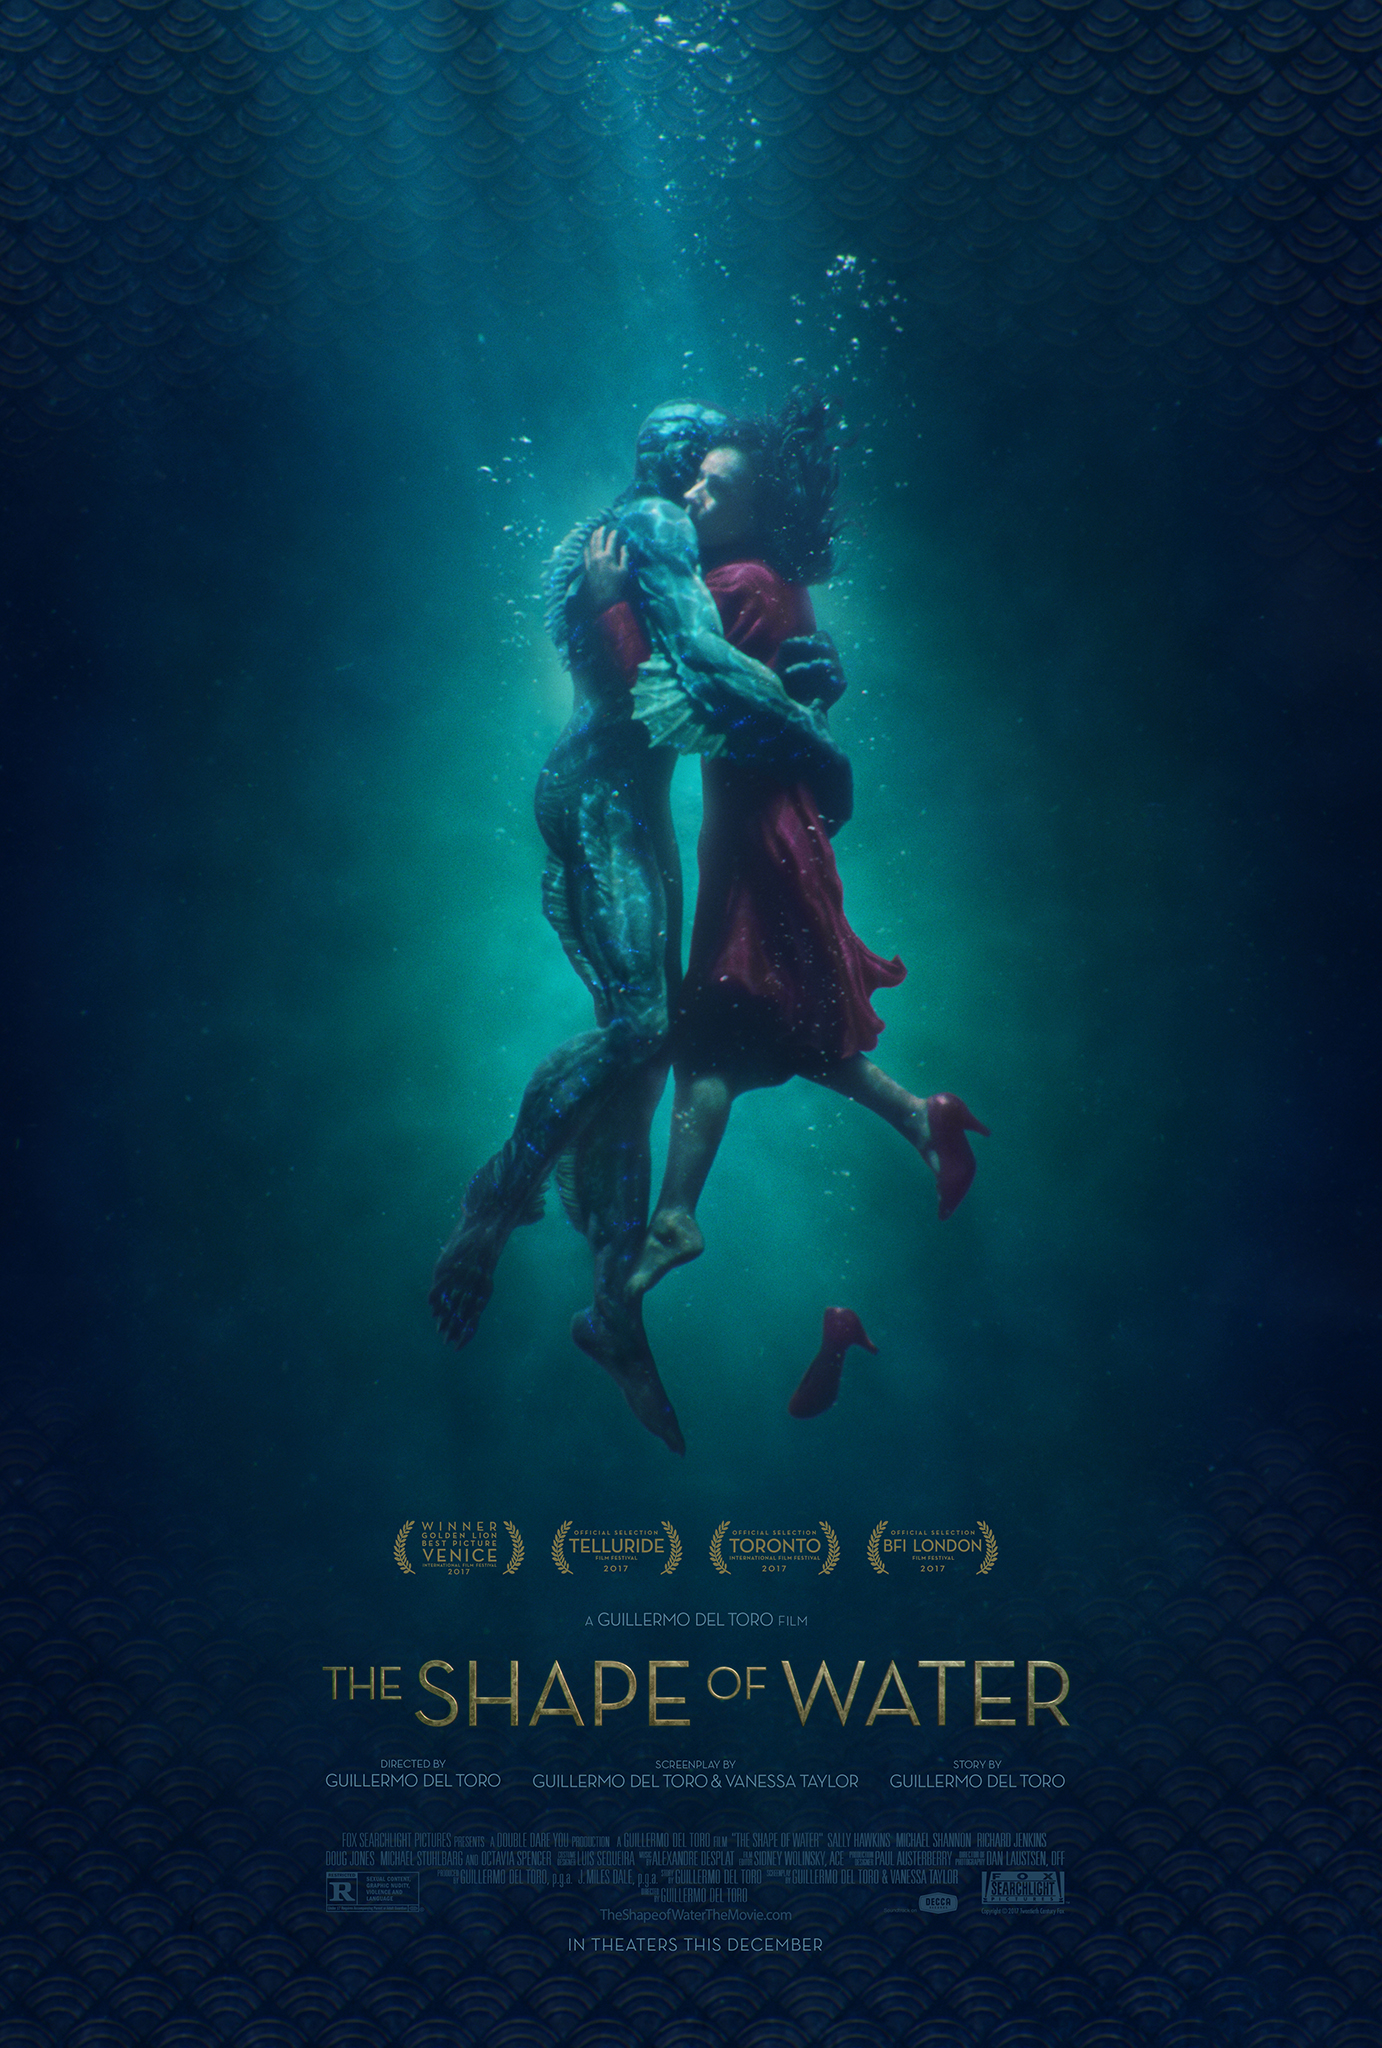 Nonton film The Shape of Water layarkaca21 indoxx1 ganool online streaming terbaru